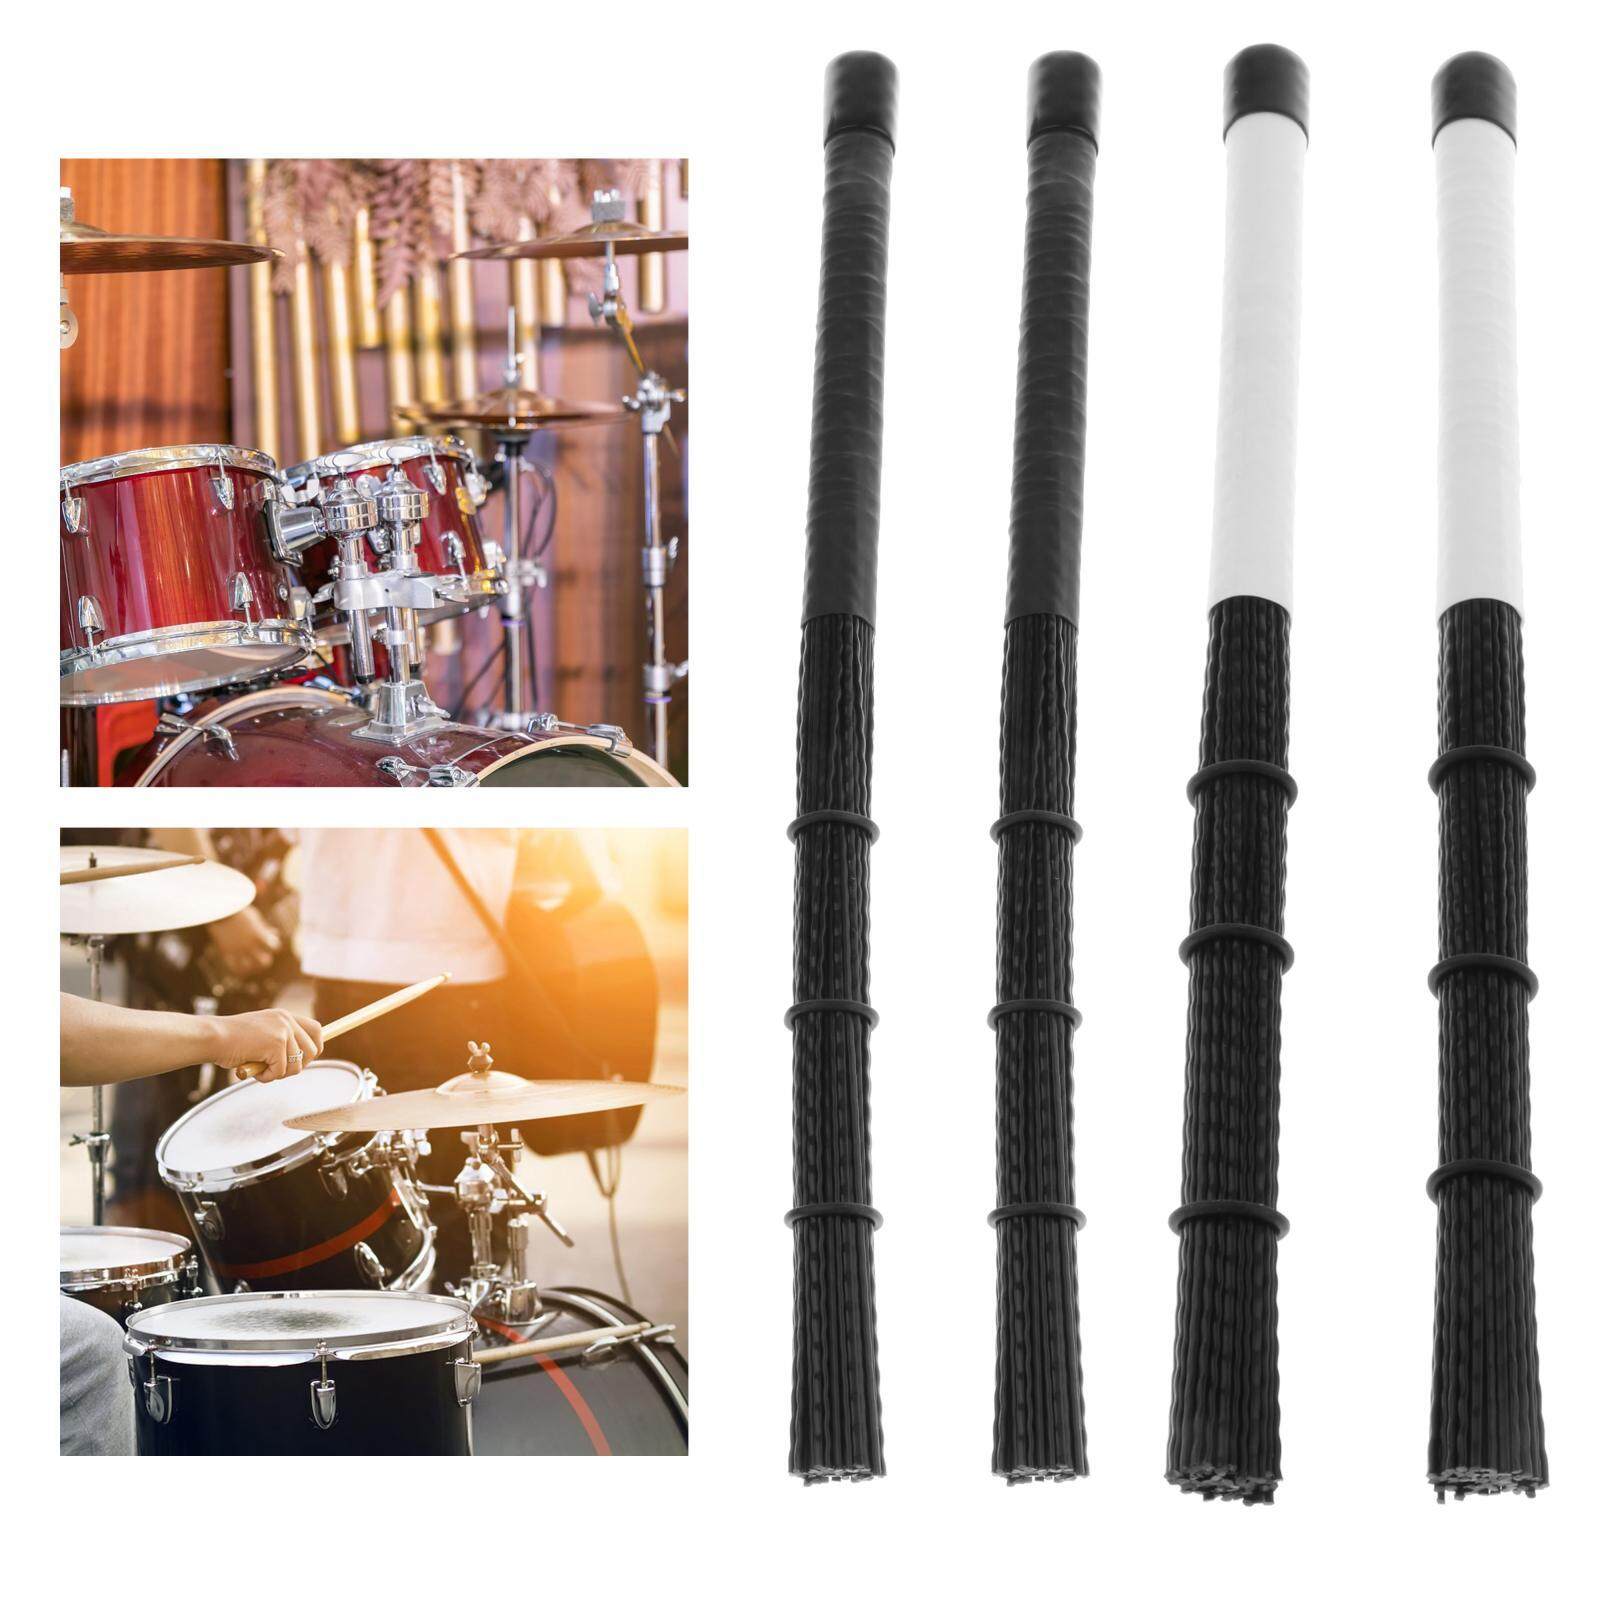 Jazz Drum Brushes Drum Kit Rubber Handle Professional Drumstick Nylon Husk Brush for Country Music Jazz Rock Drummers Beginner